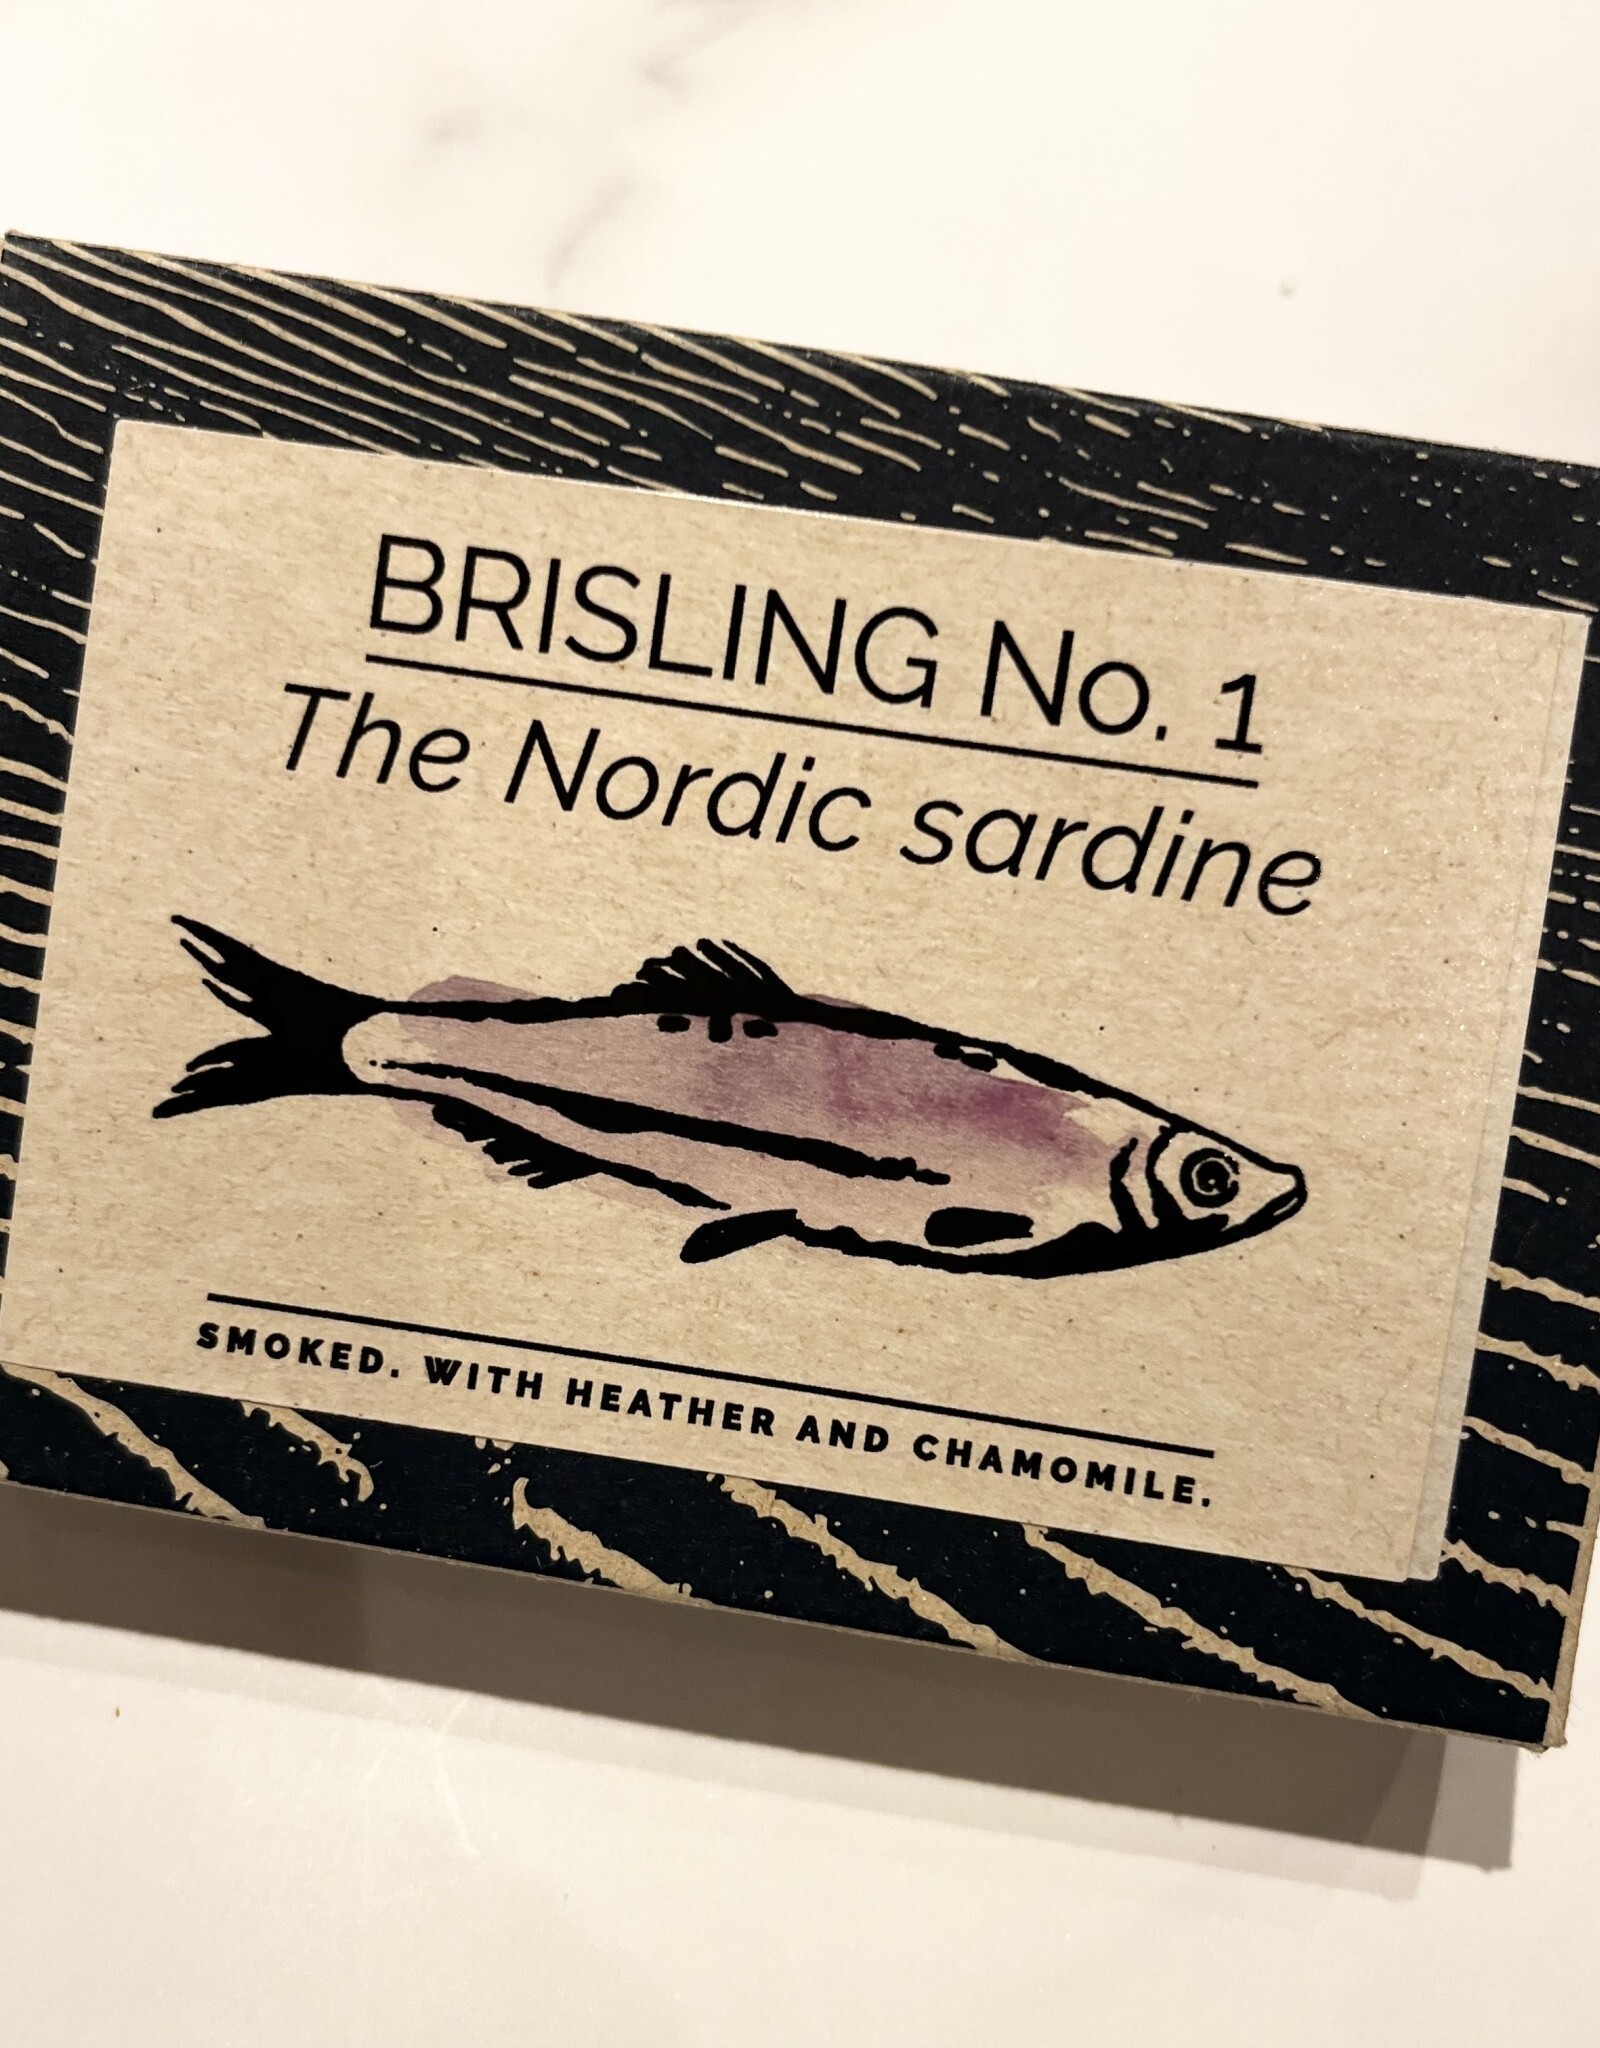 Fangst Brisling No. 1 "The Nordic Sardine" Baltic Sea Sprat Smoked w/Heather & Chamomile CONSERVAS